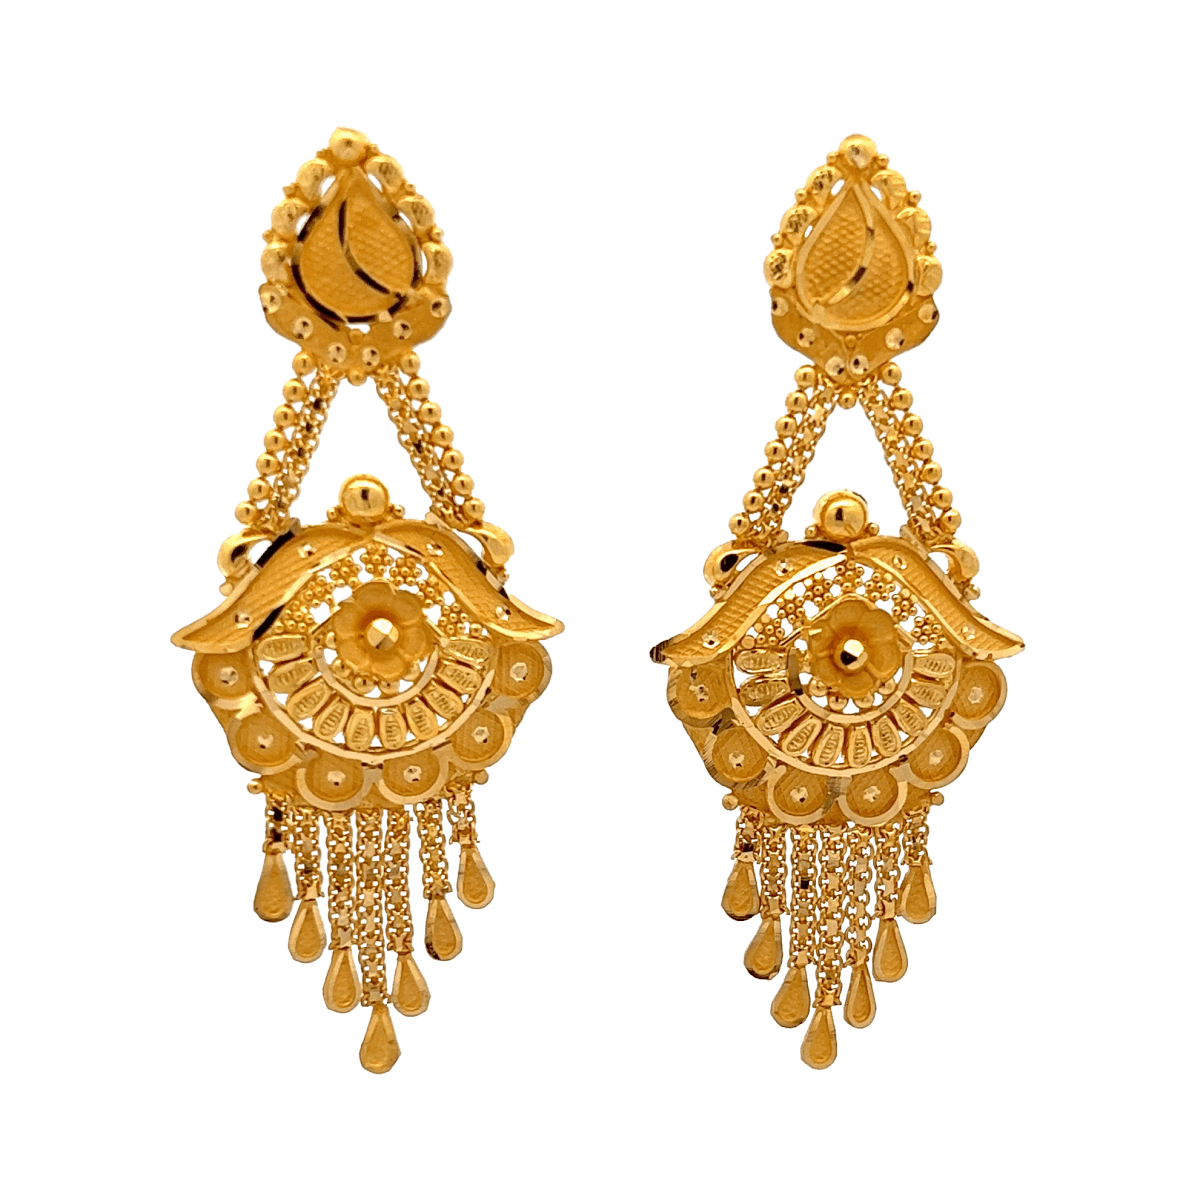 5 Stunning & Traditional Big Gold Pendant Designs